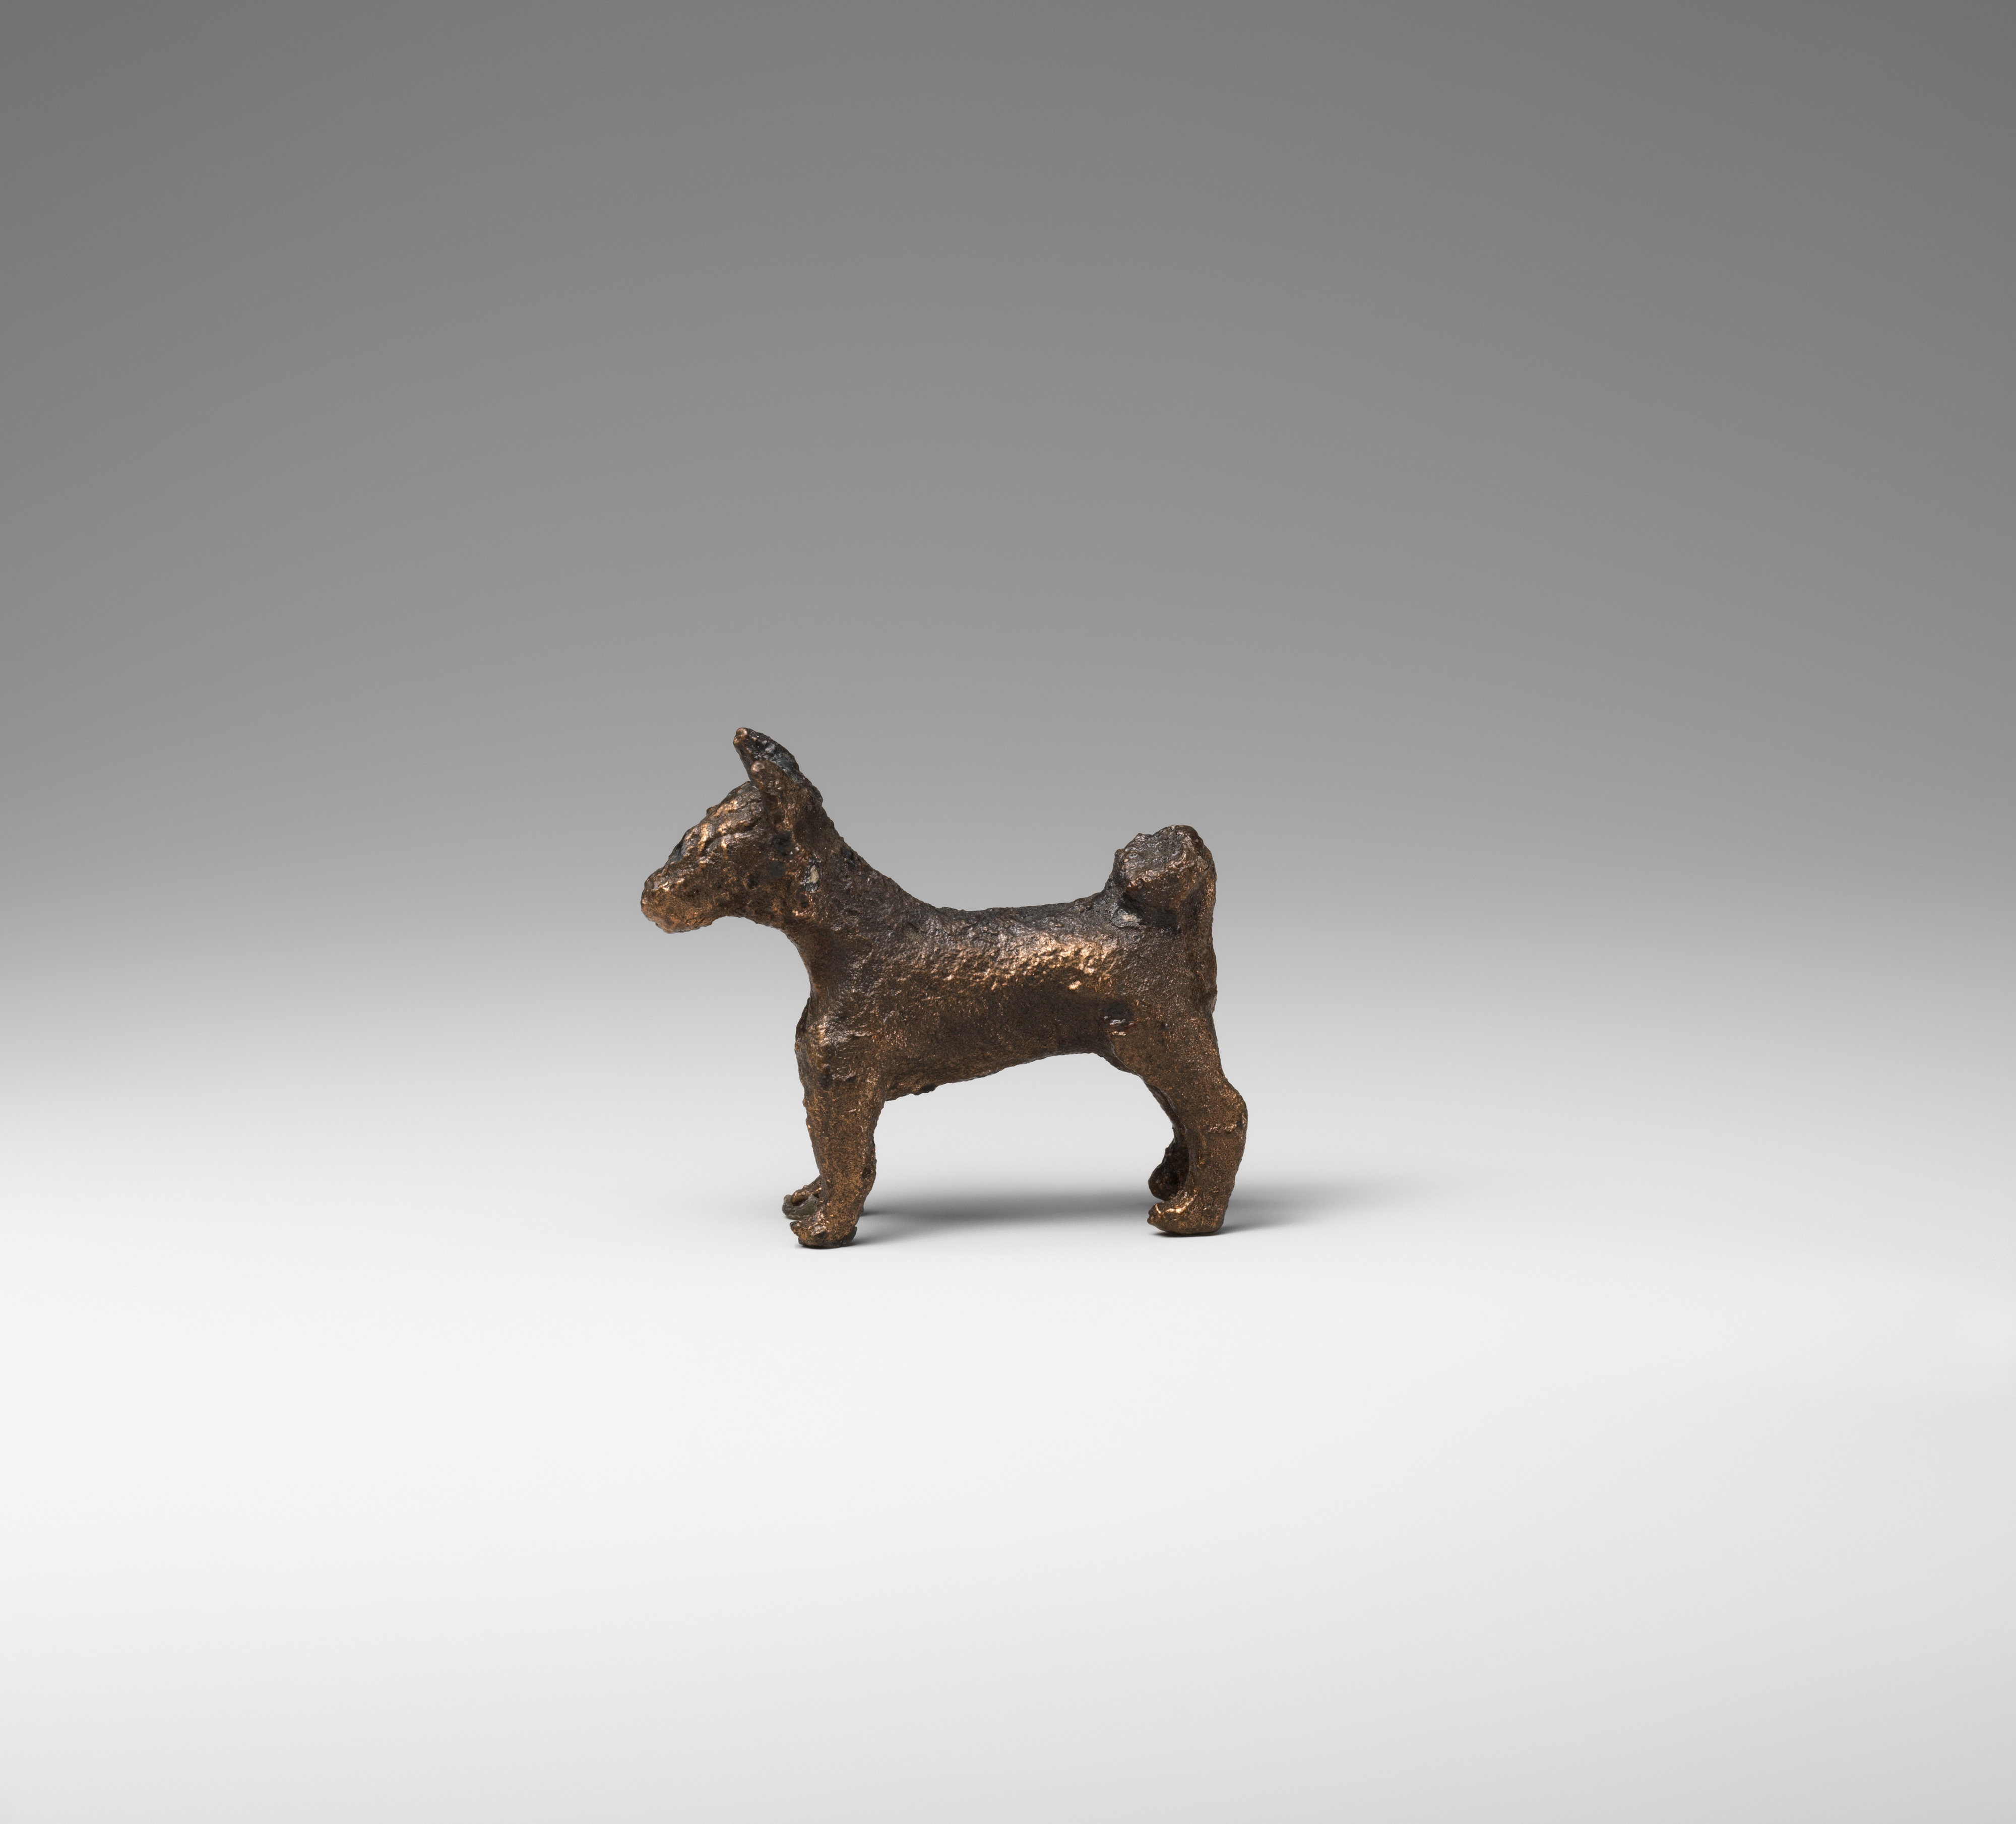 Model Clay Dogs from Nineveh (Illustration) - World History Encyclopedia